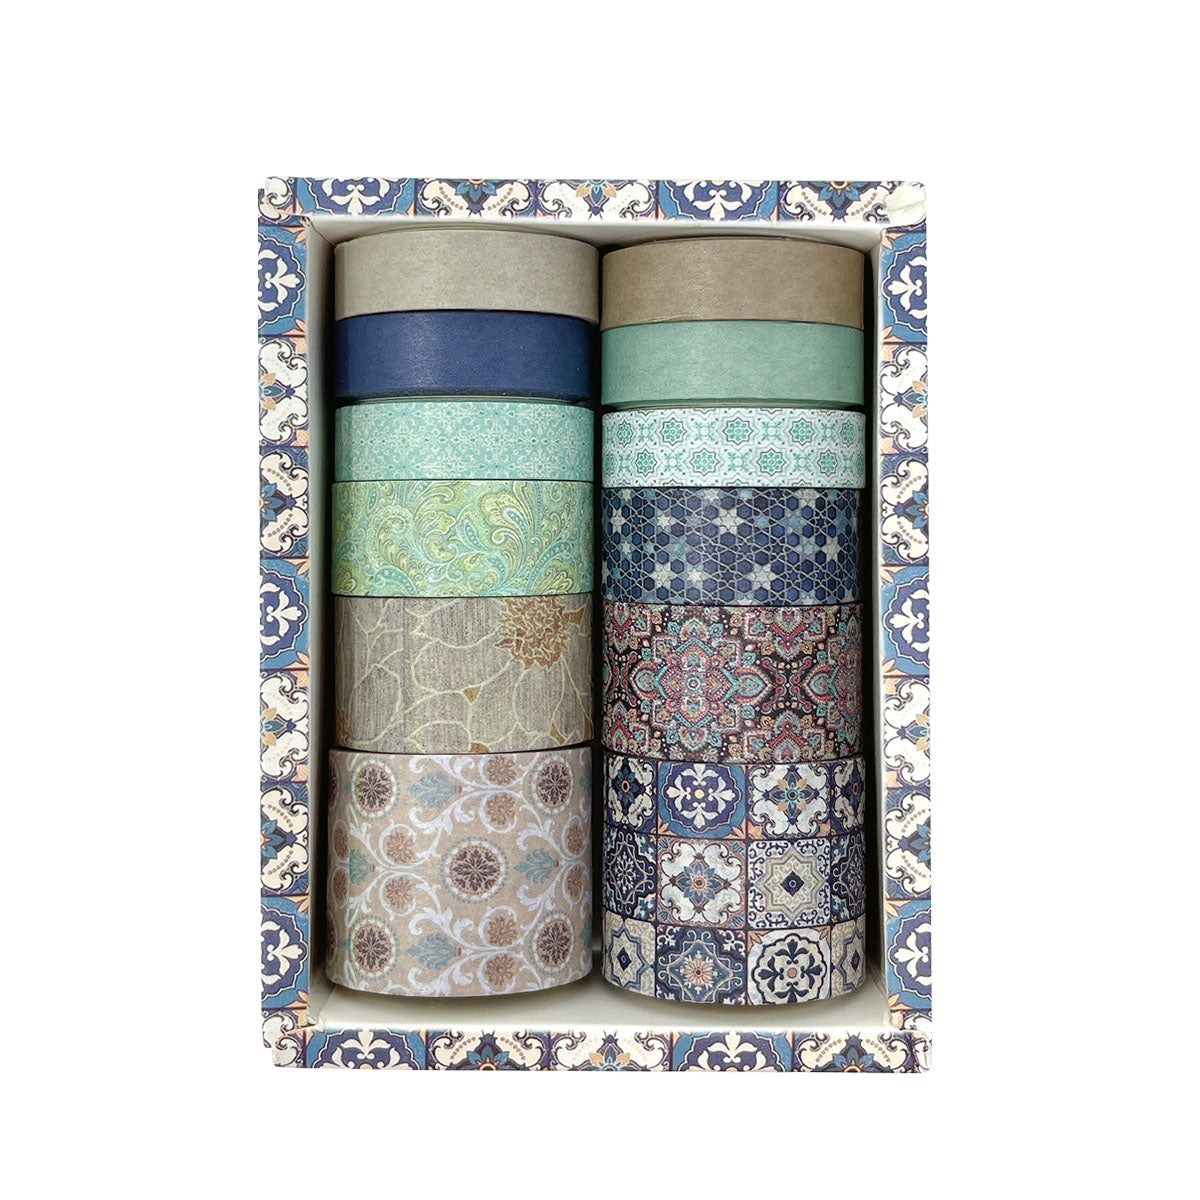 Wrapables Decorative Washi Tape Box Set for DIY Arts & Crafts